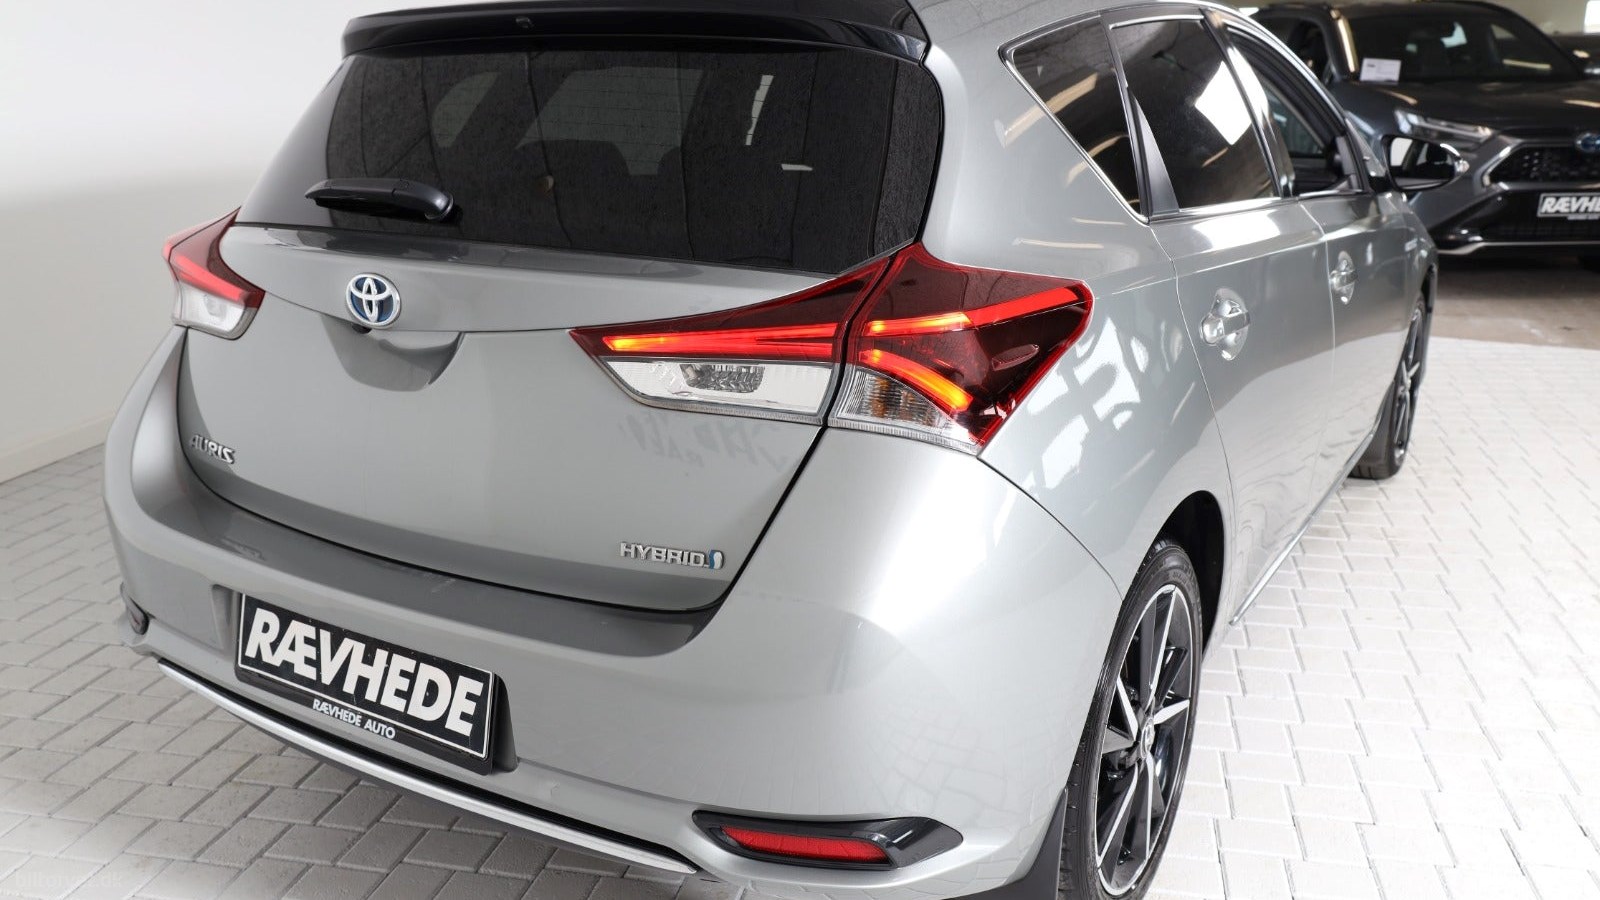 Brugt Toyota Auris 1,8 Hybrid CVT til salg